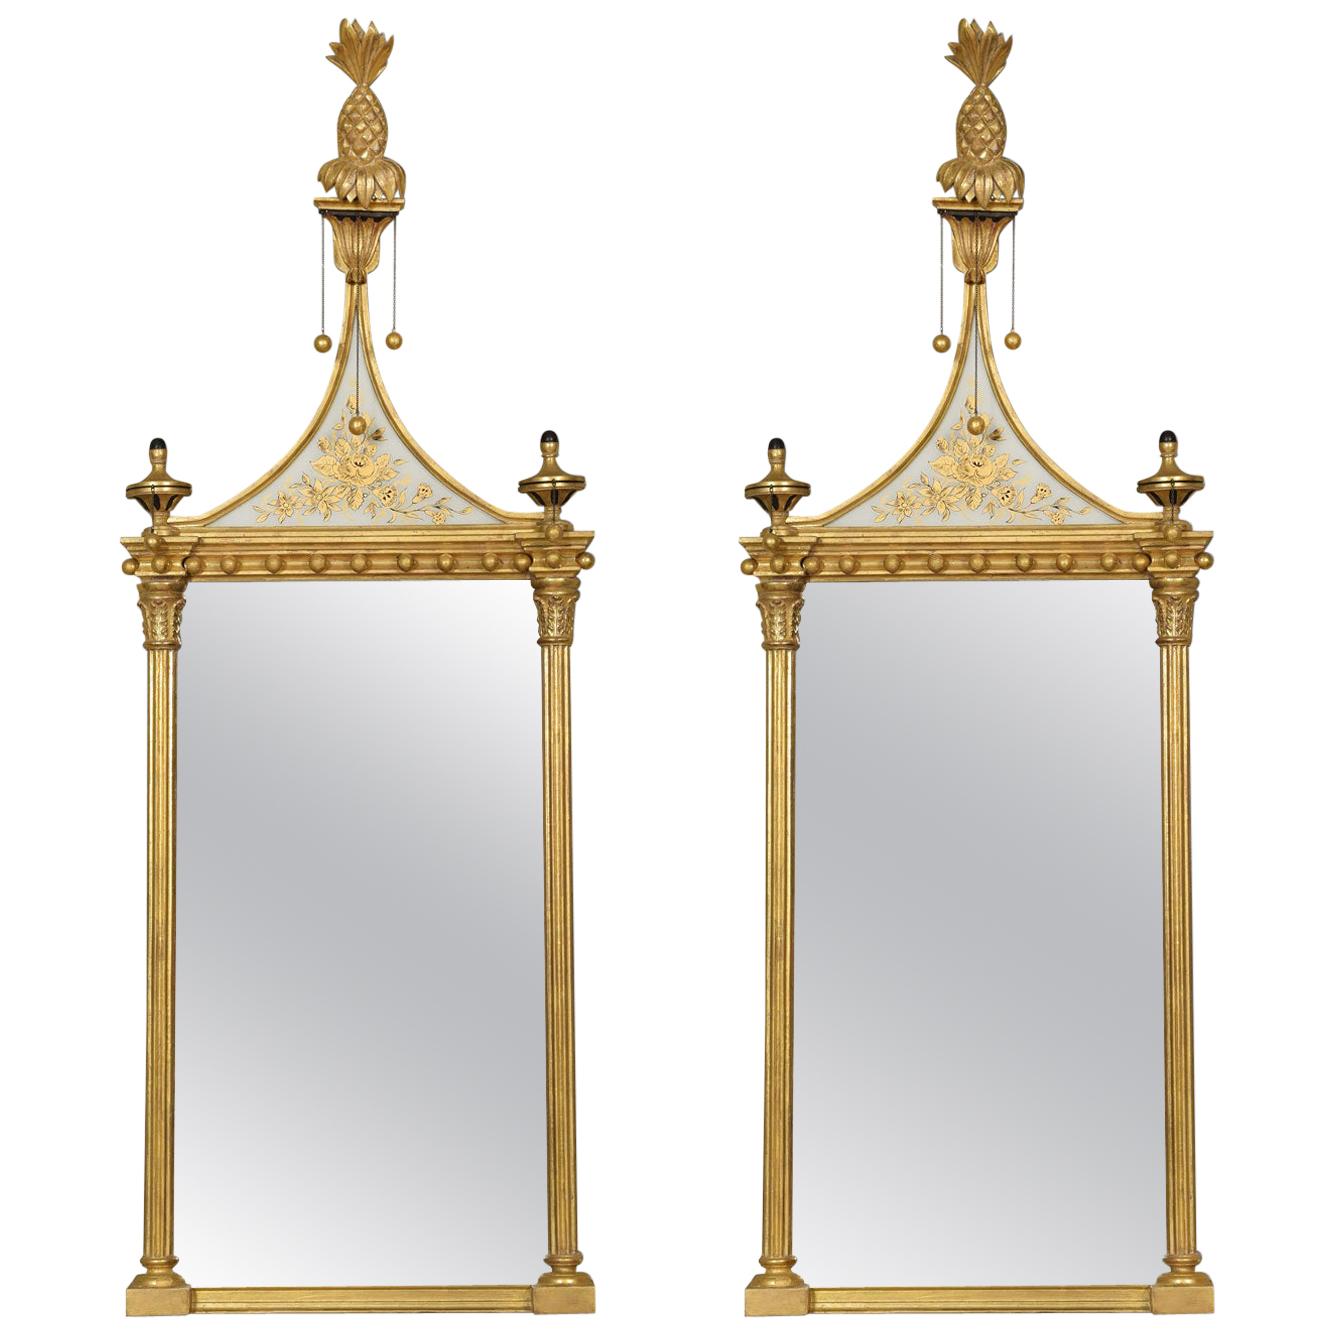 Pair of Neoclassical Pier Mirrors